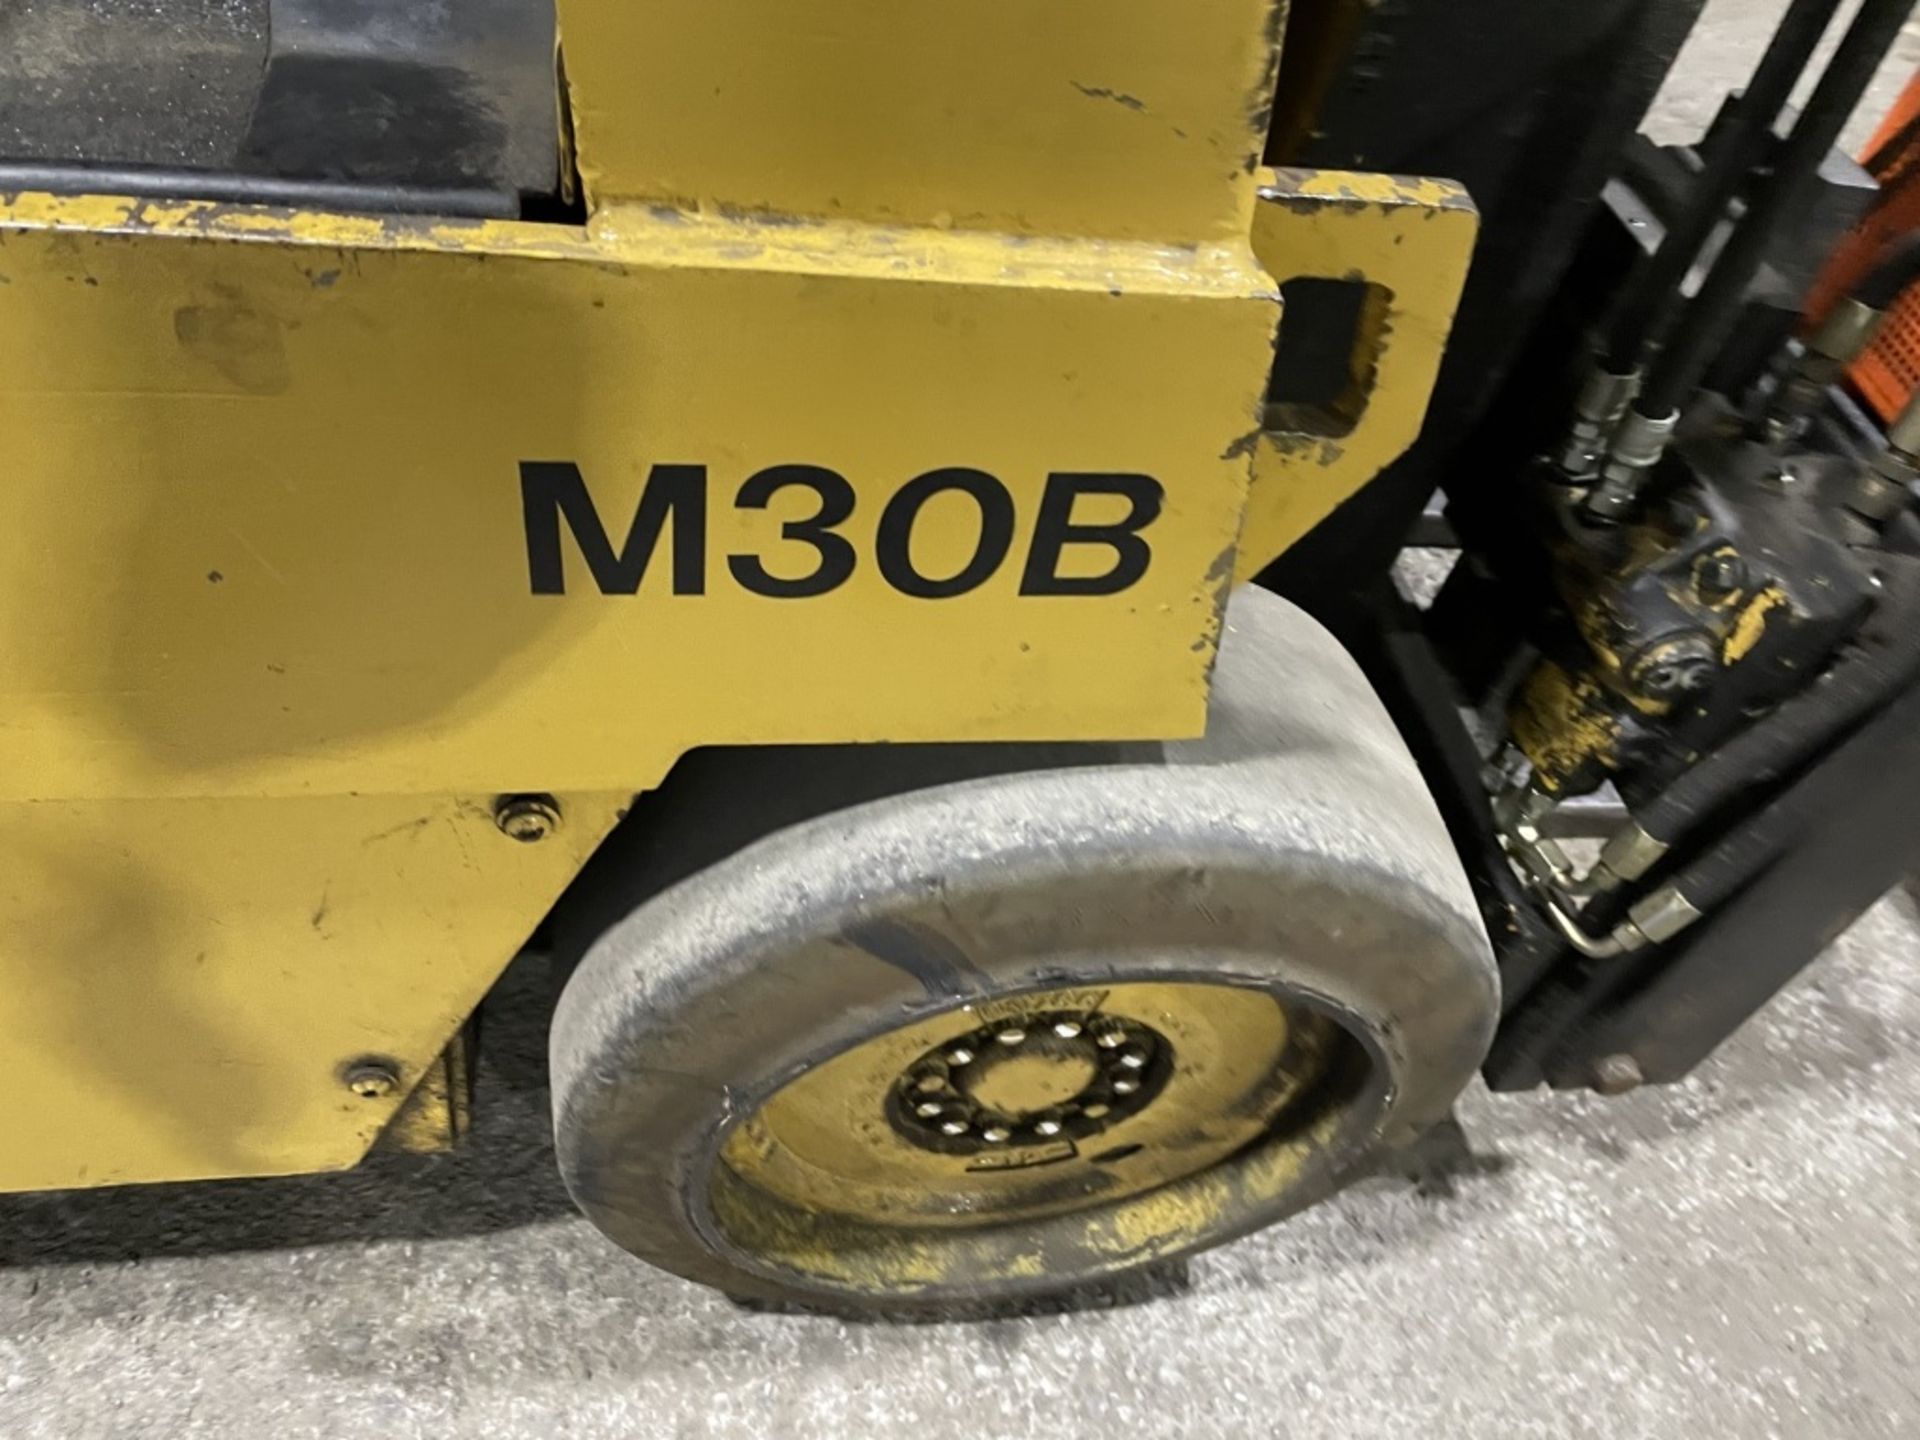 Caterpillar M30B Forklift - Image 17 of 17